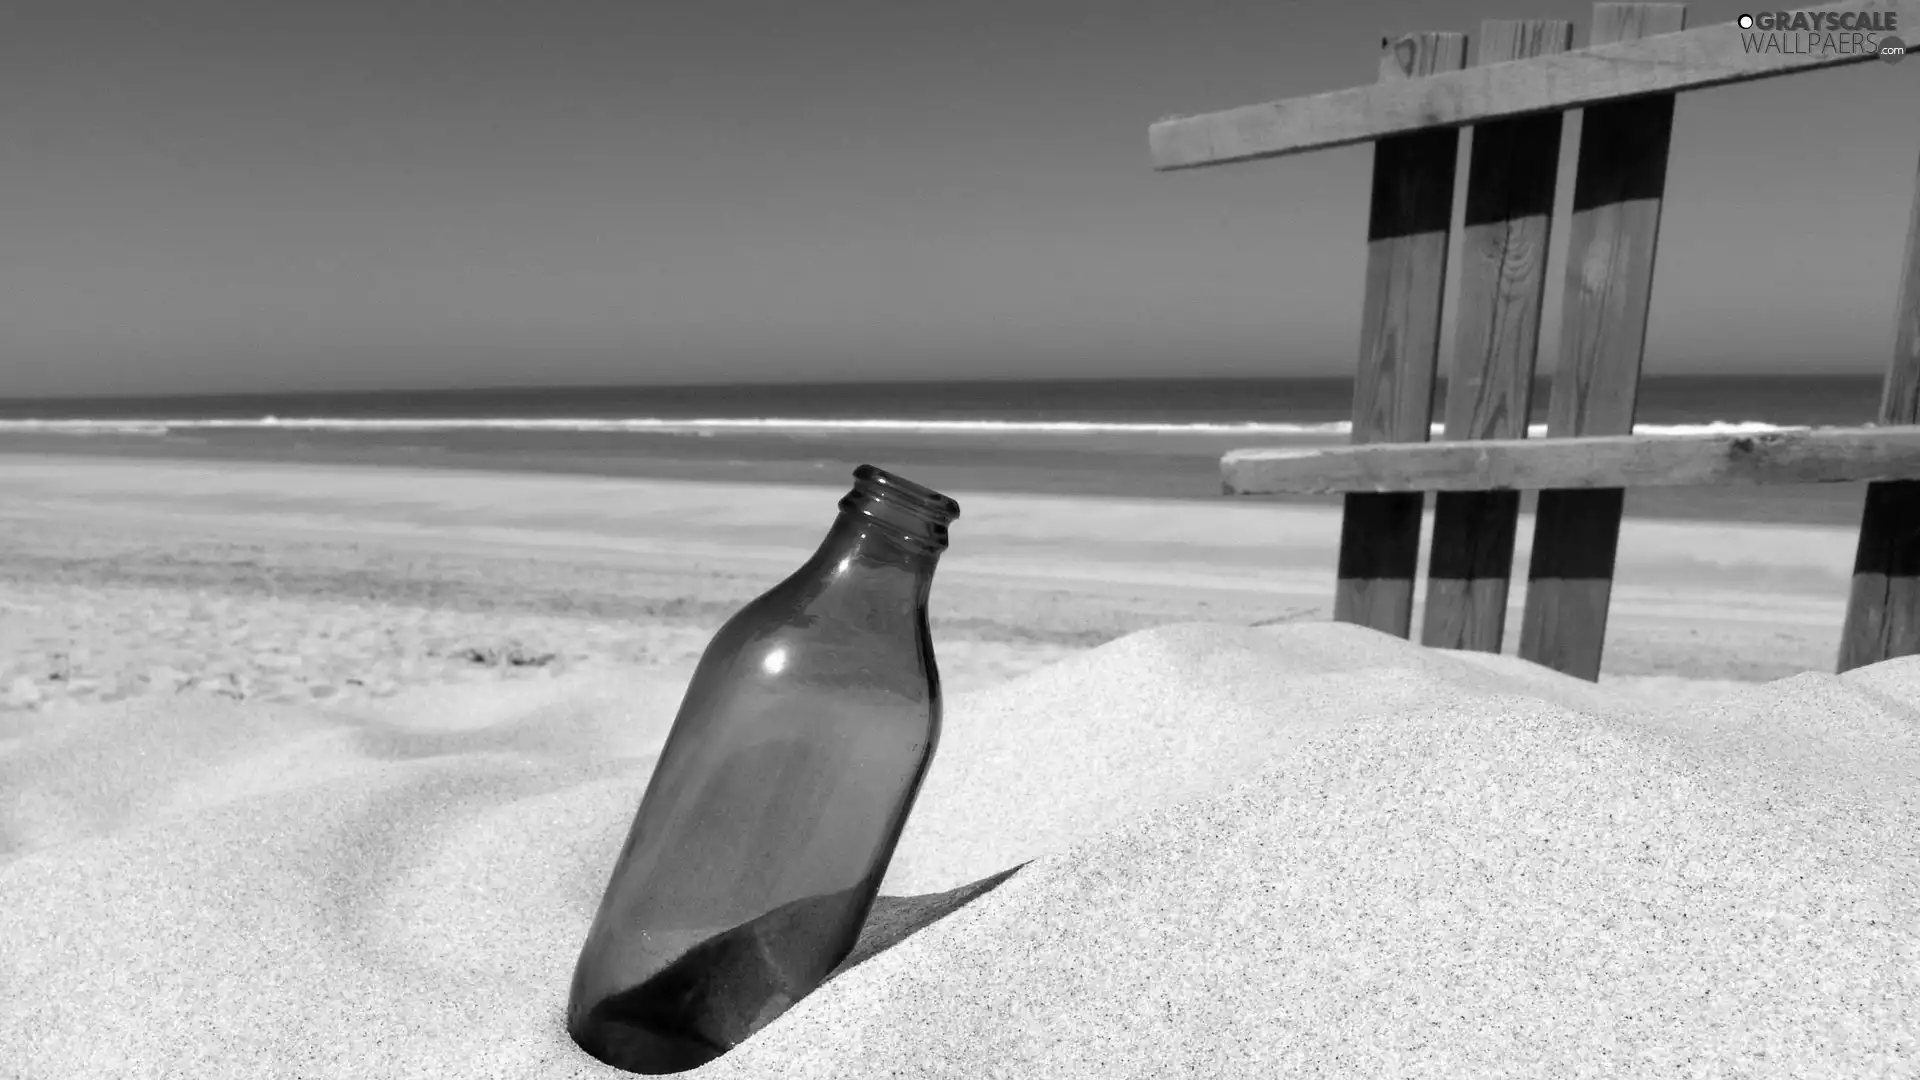 Bottle, Beaches, Sand